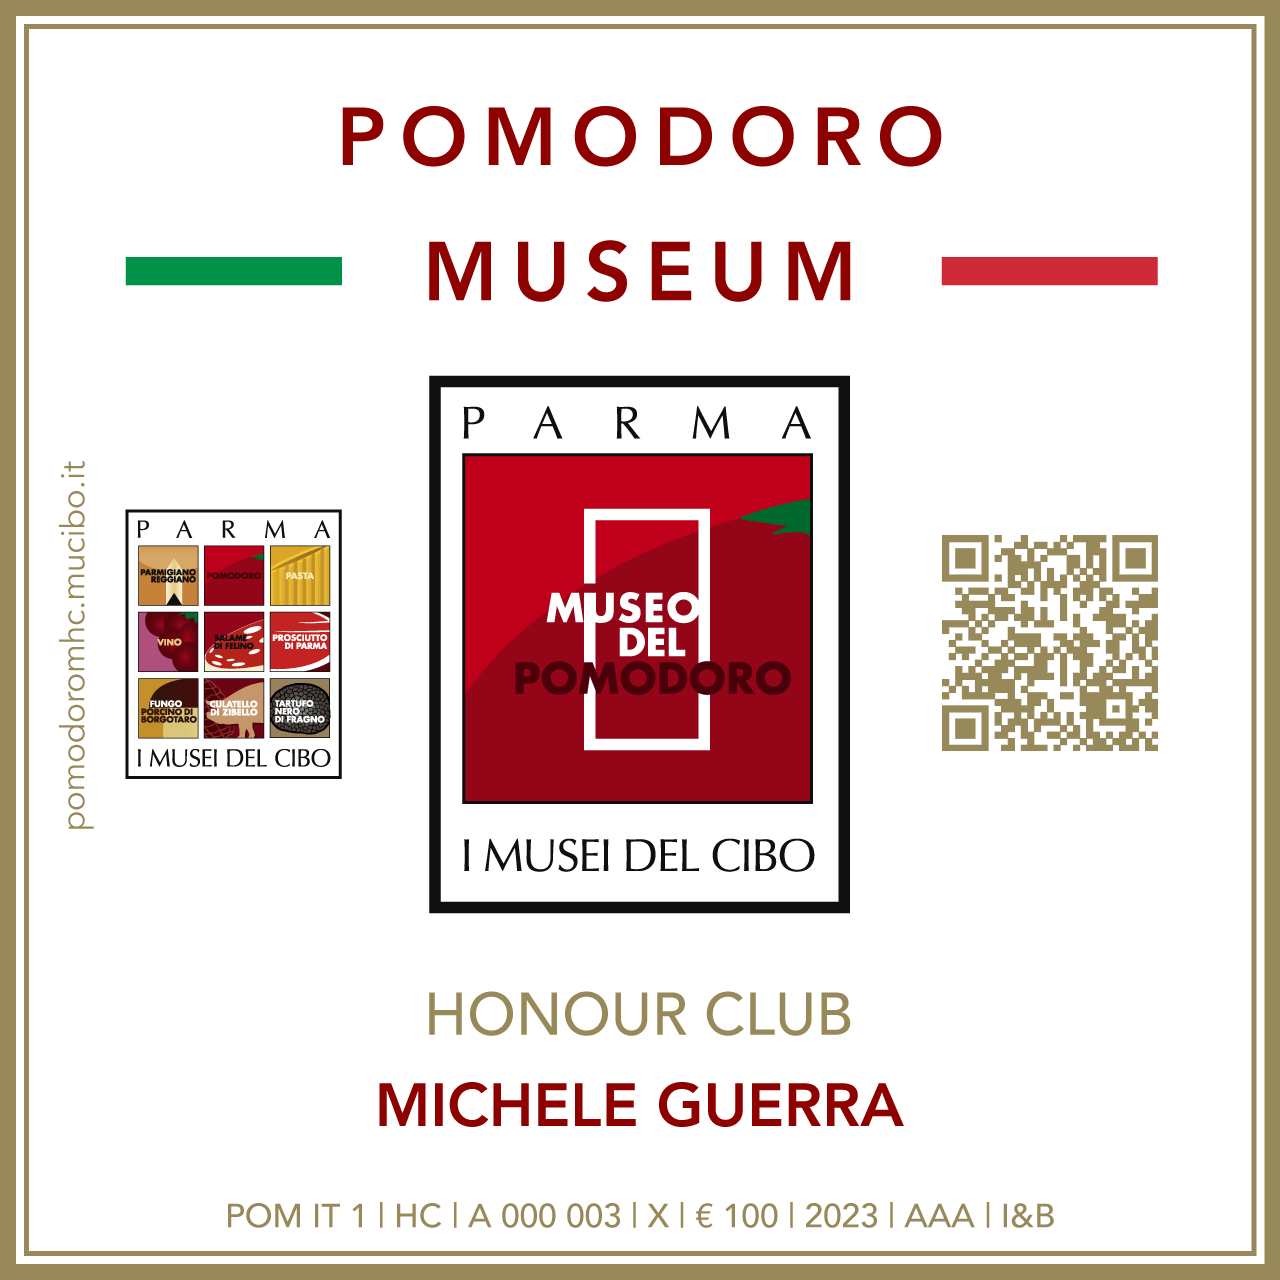 Pomodoro Museum Honour Club - Token Id A 000 003 - MICHELE GUERRA